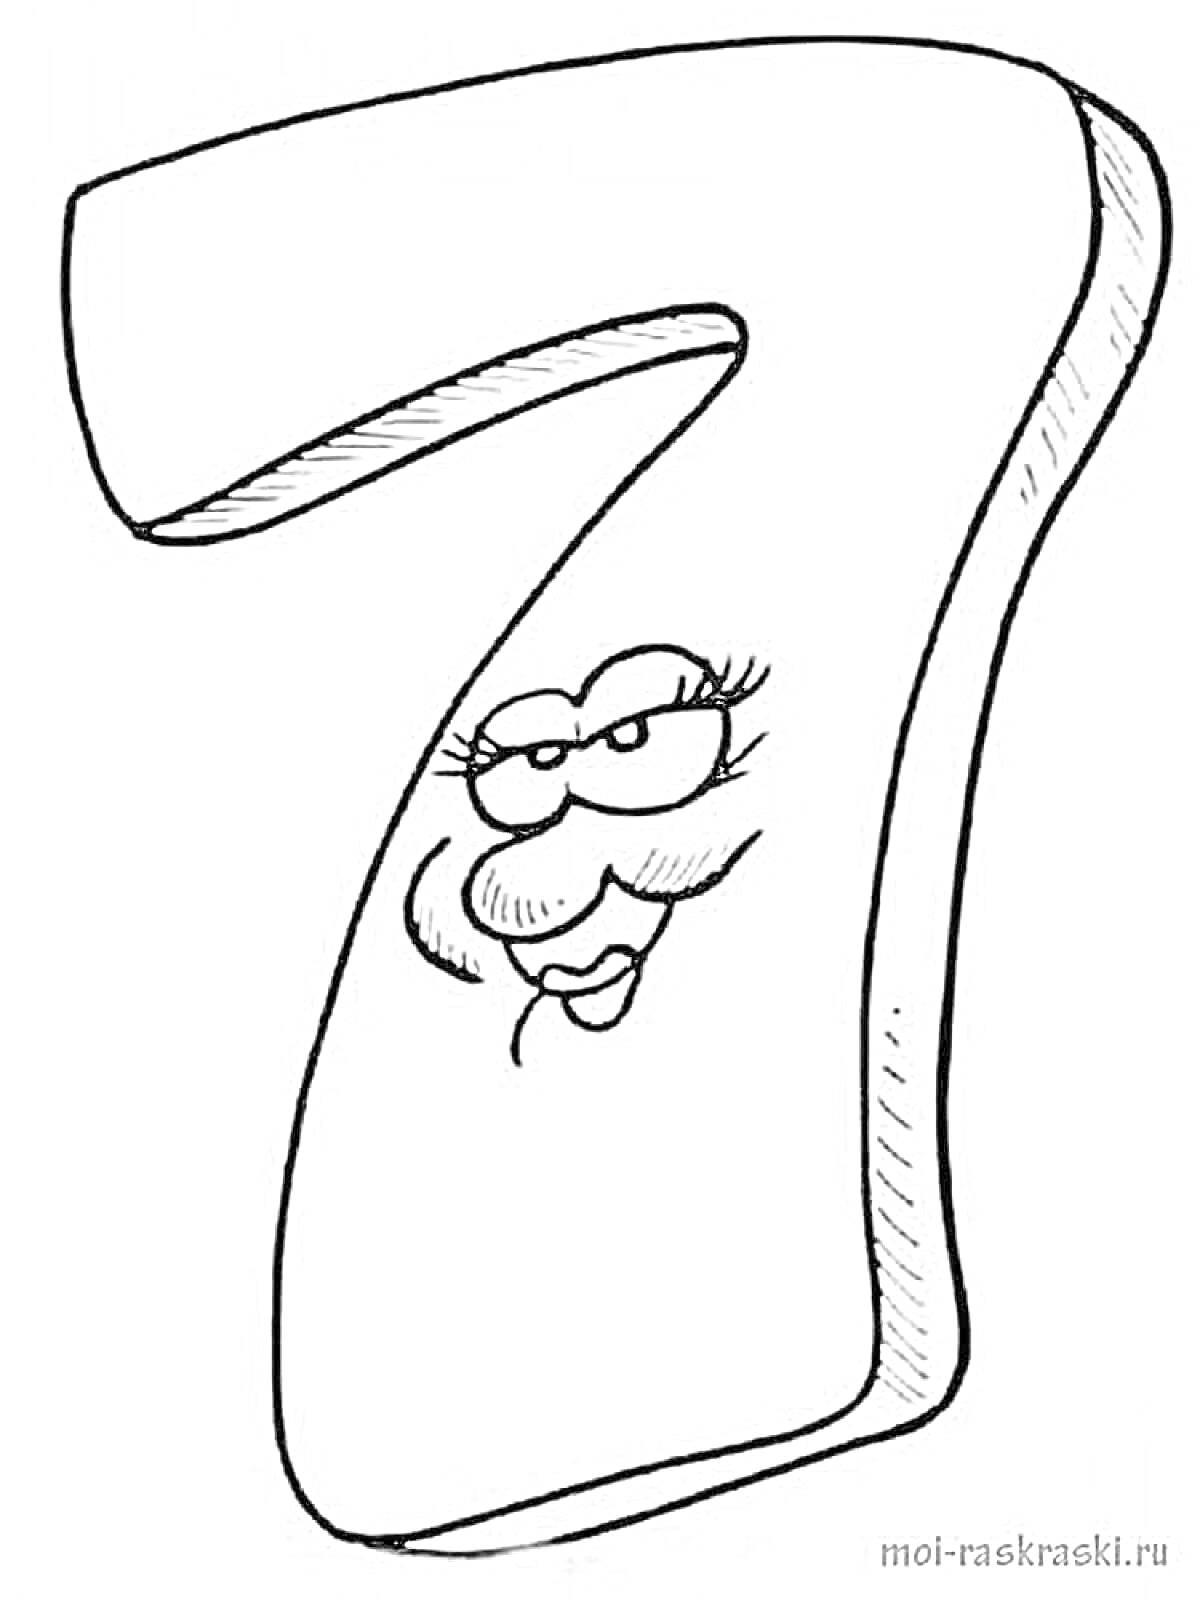 Раскраска Цифра 7 с лицом и ресницами